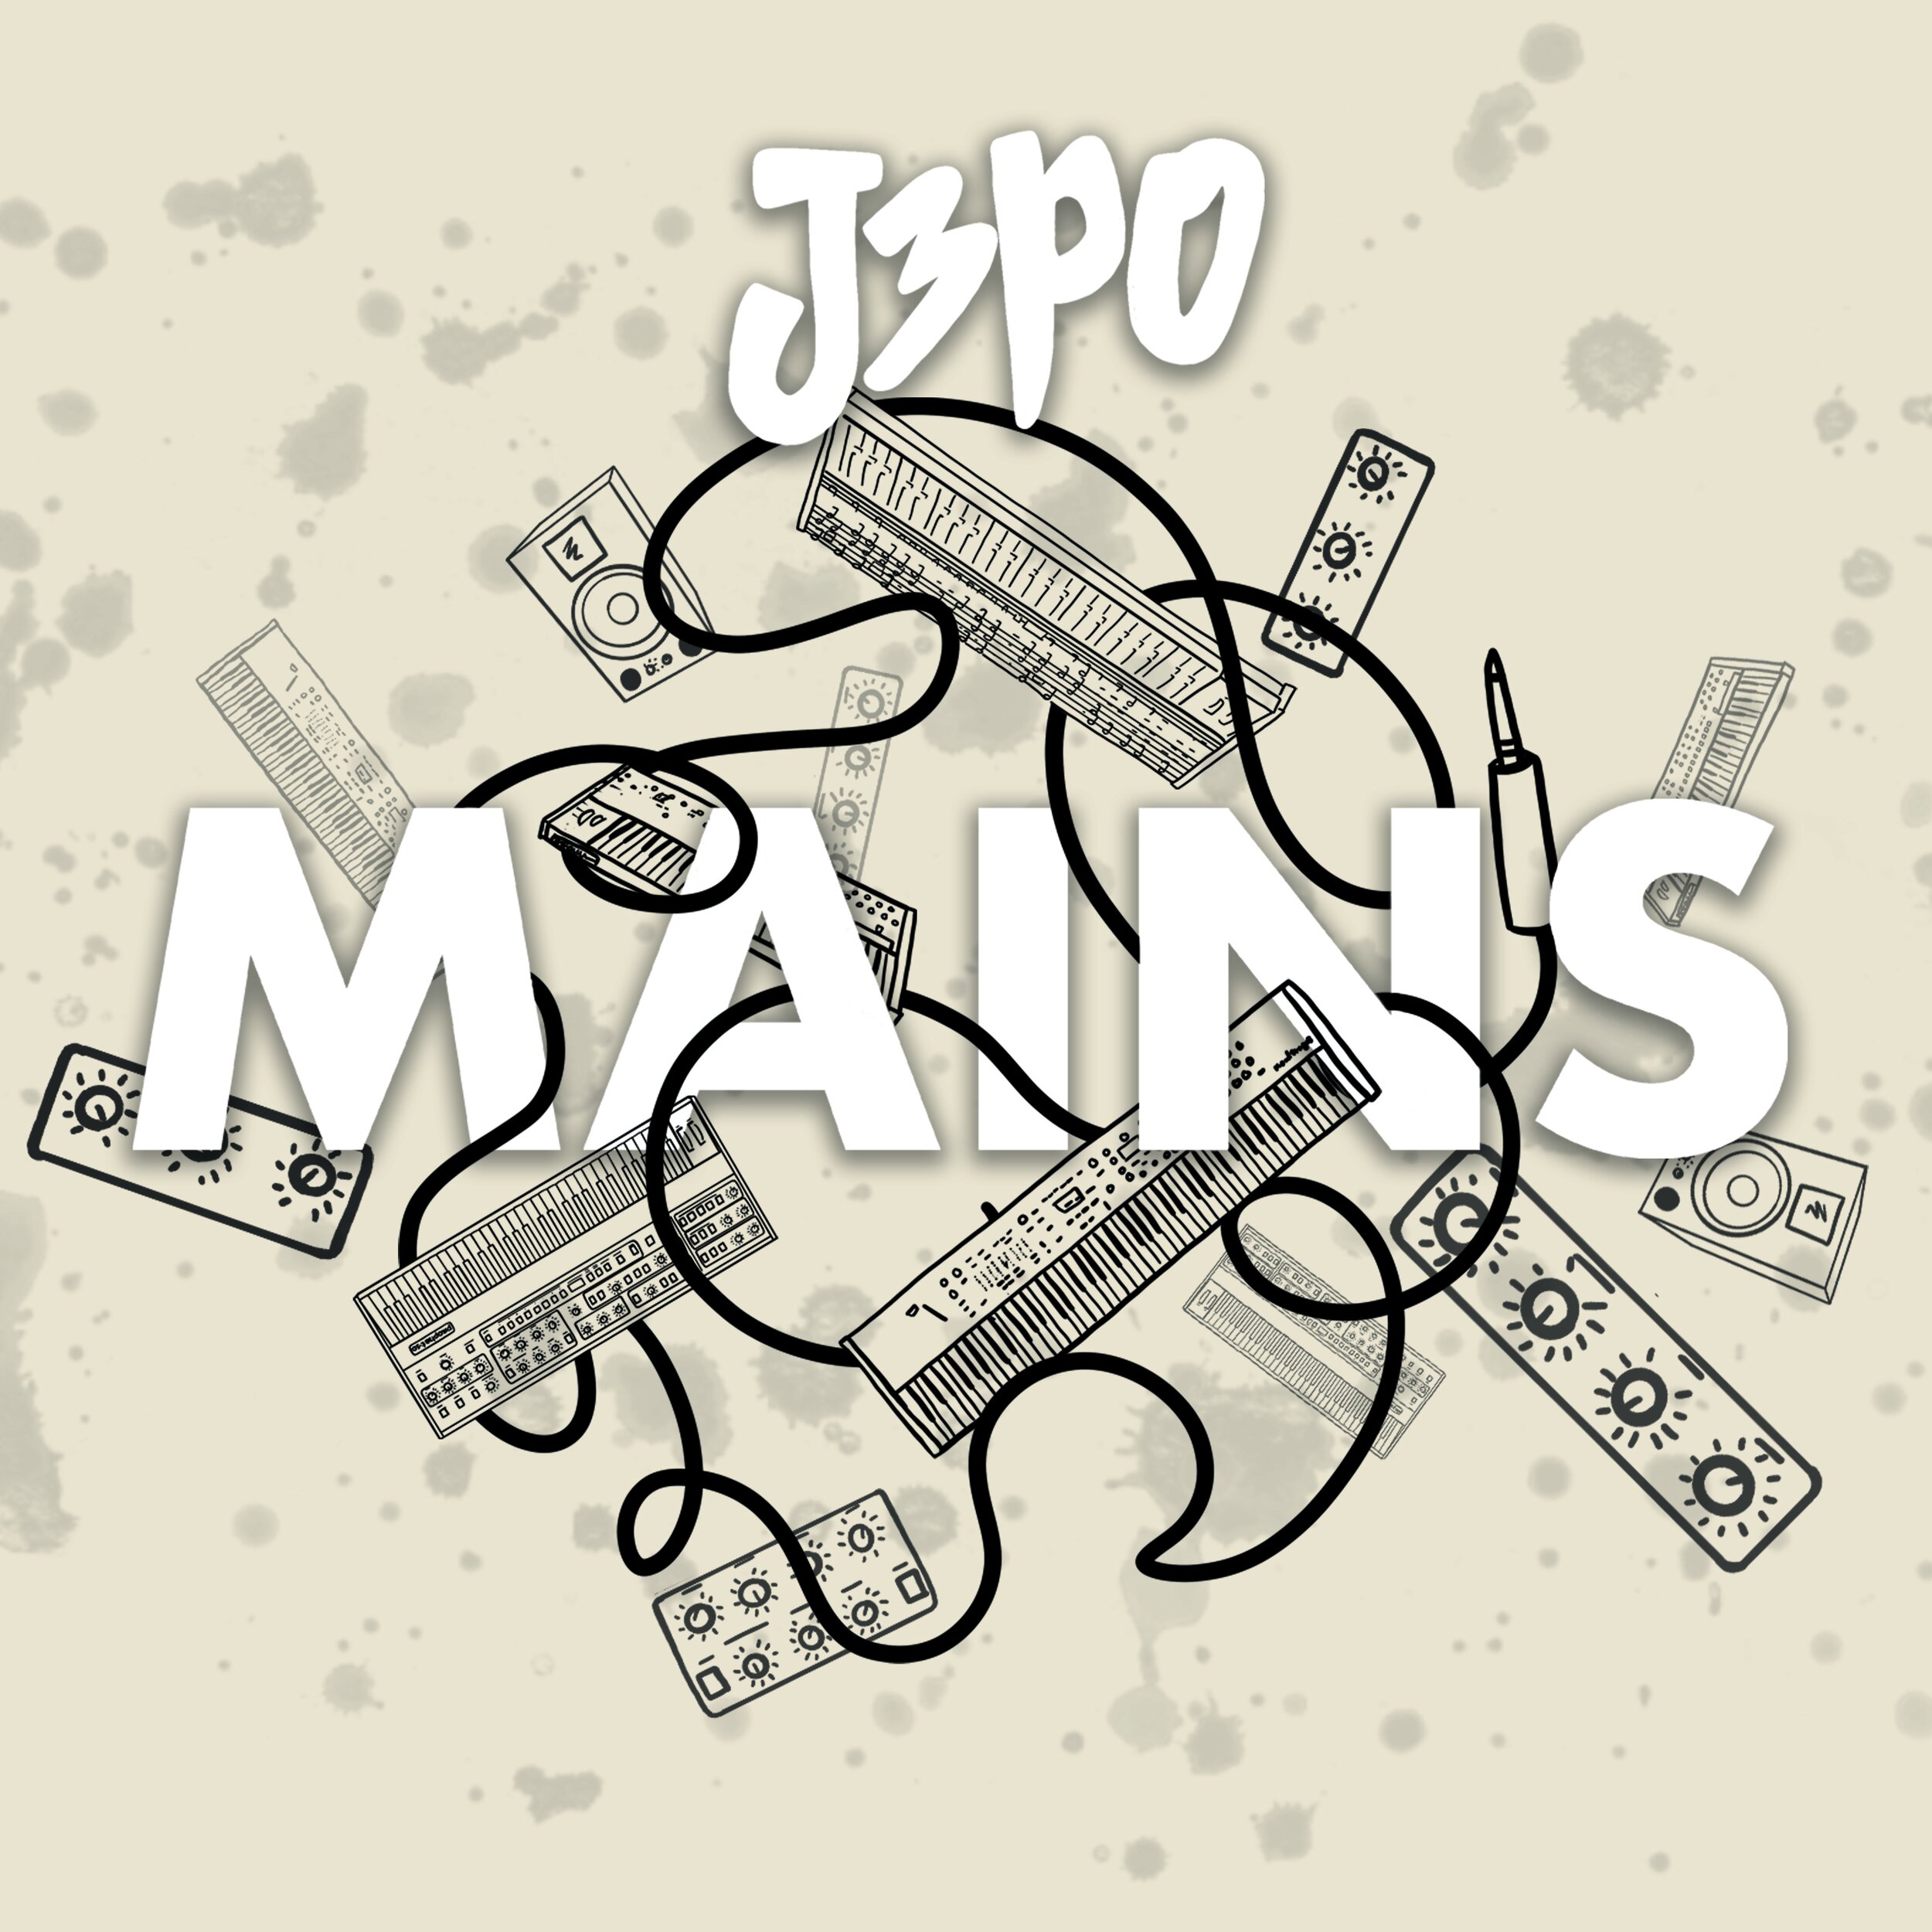 J3PO MAINS Album Cover.jpg